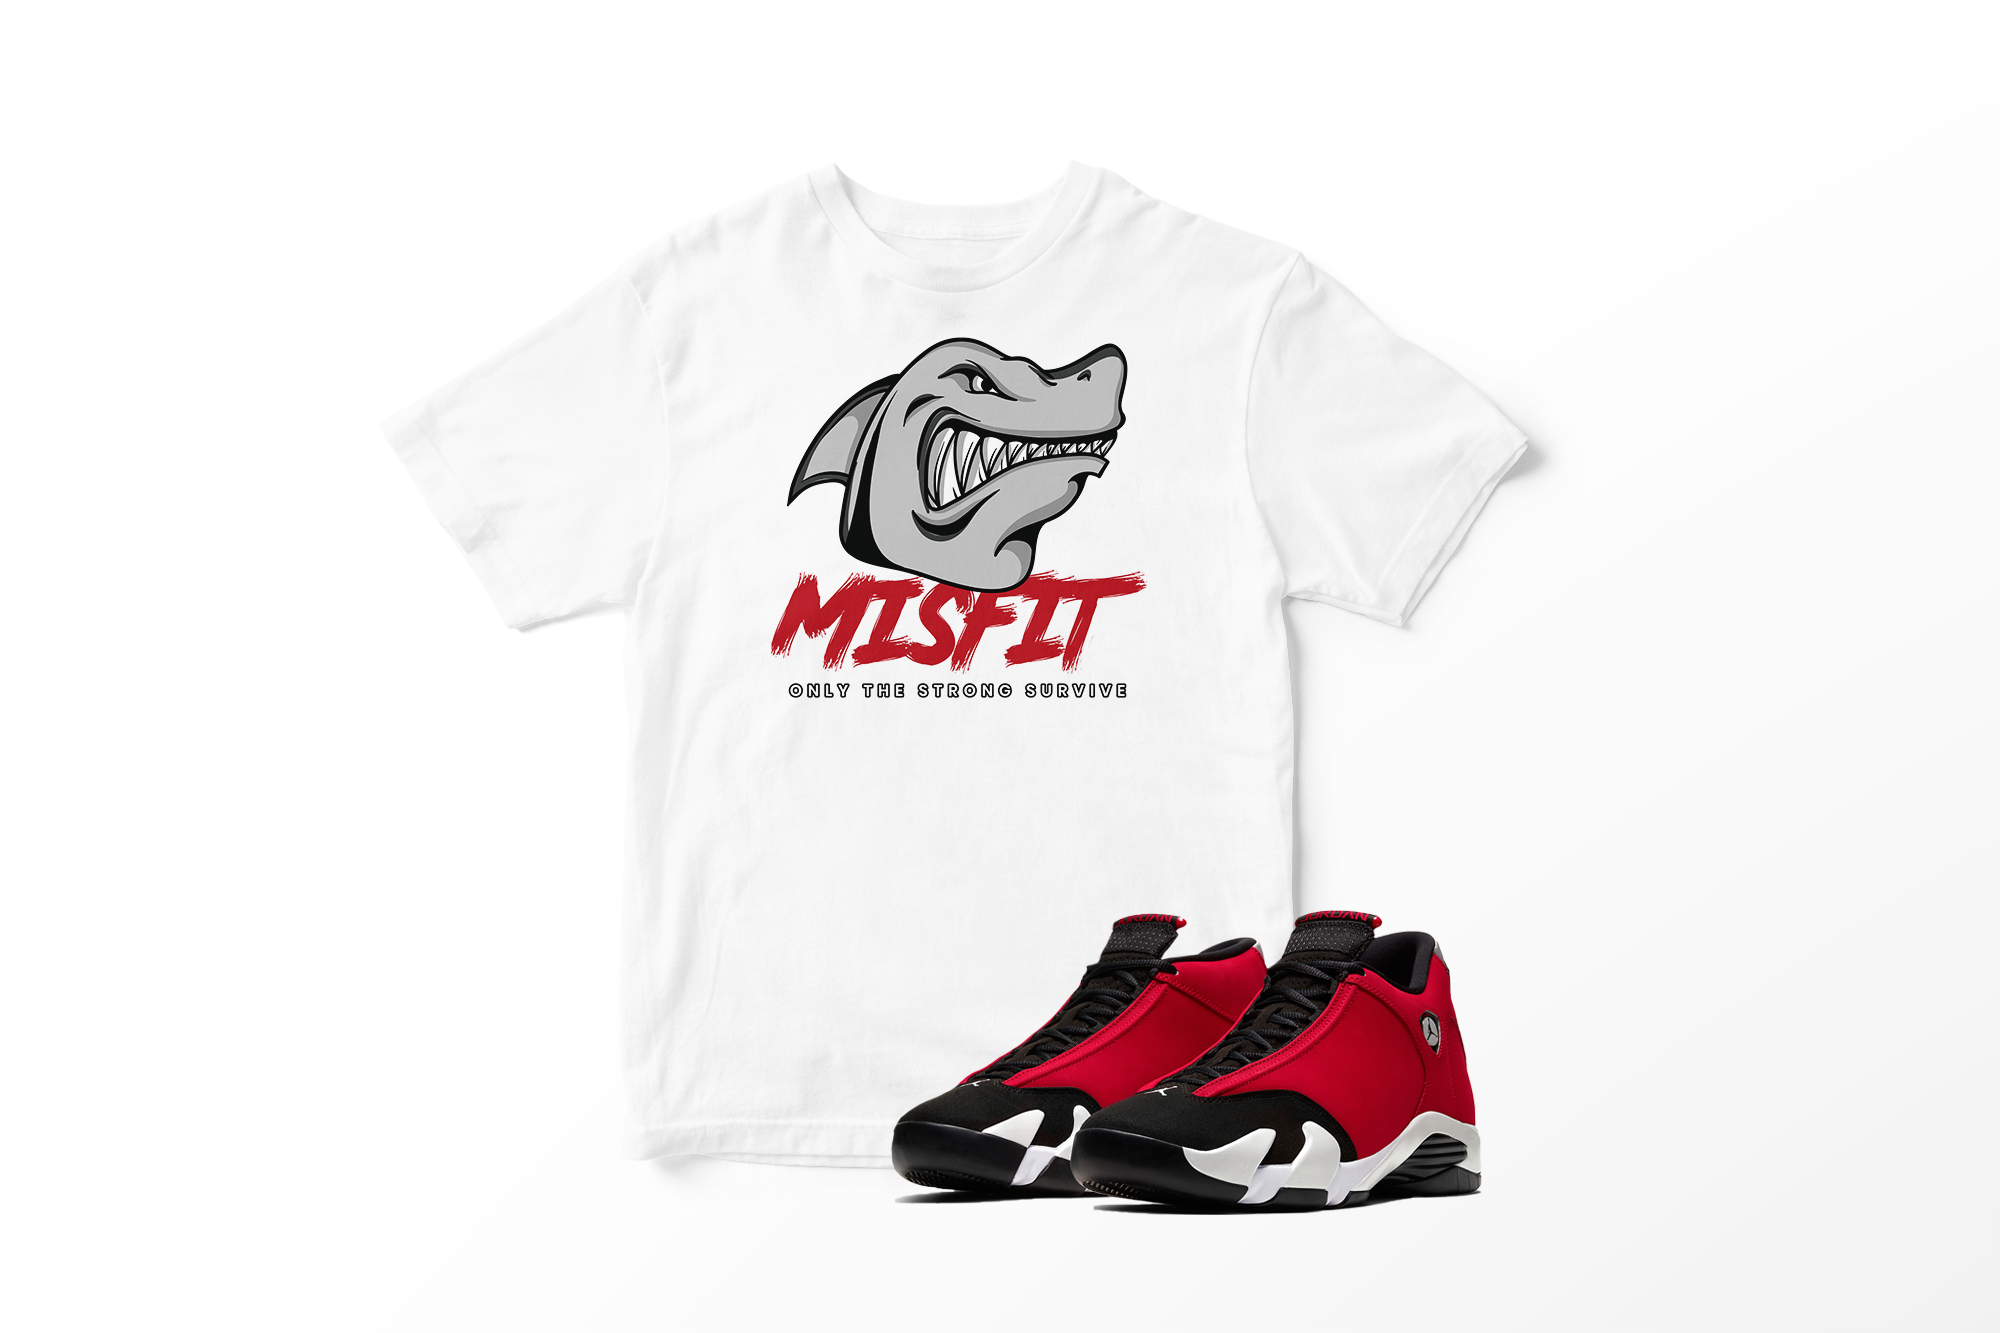 'Misfit Shark' in Gym Red 14 CW Short Sleeve Tee